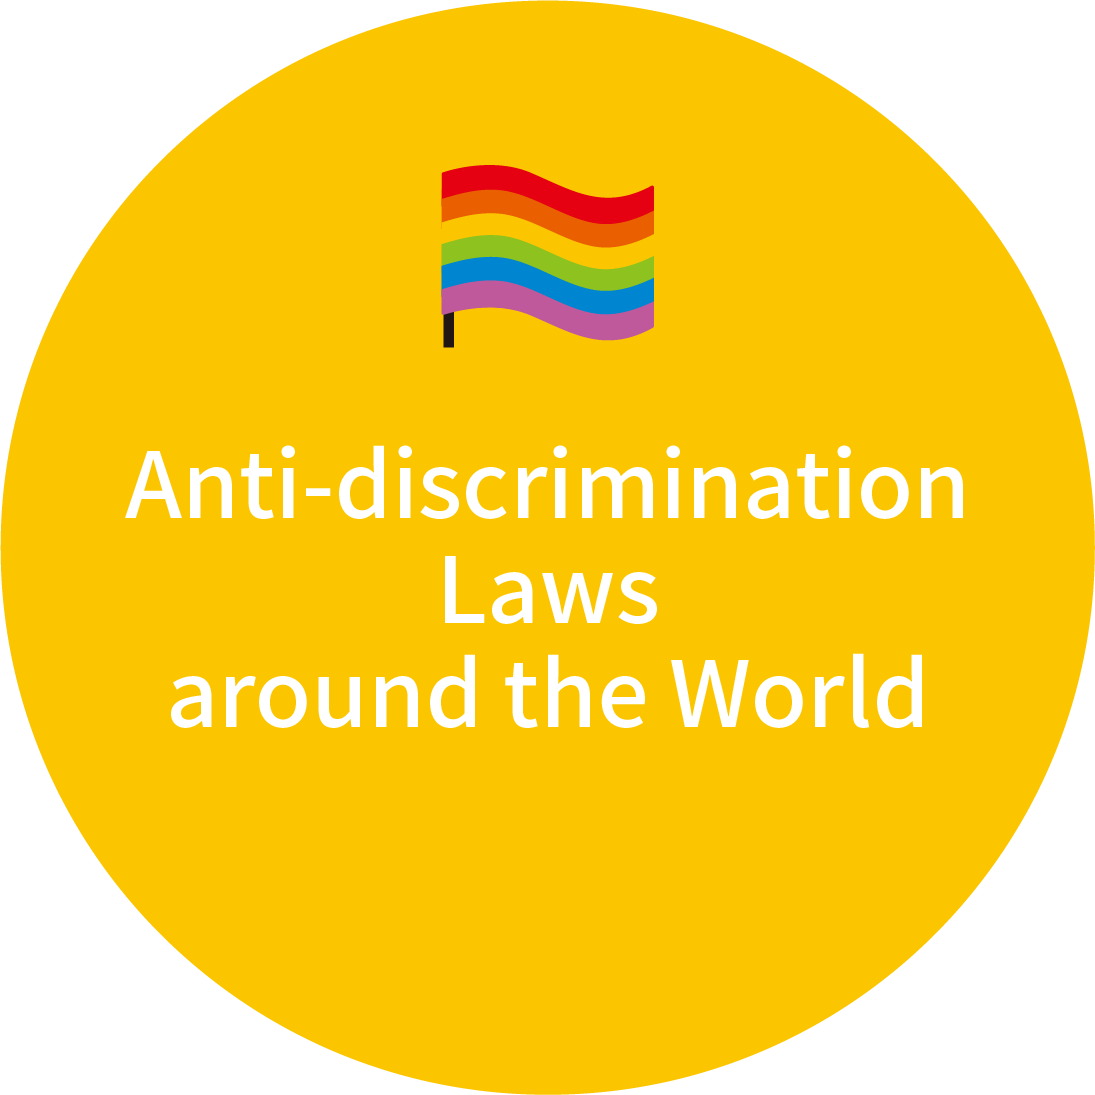 Anti-discrimination Laws around the World